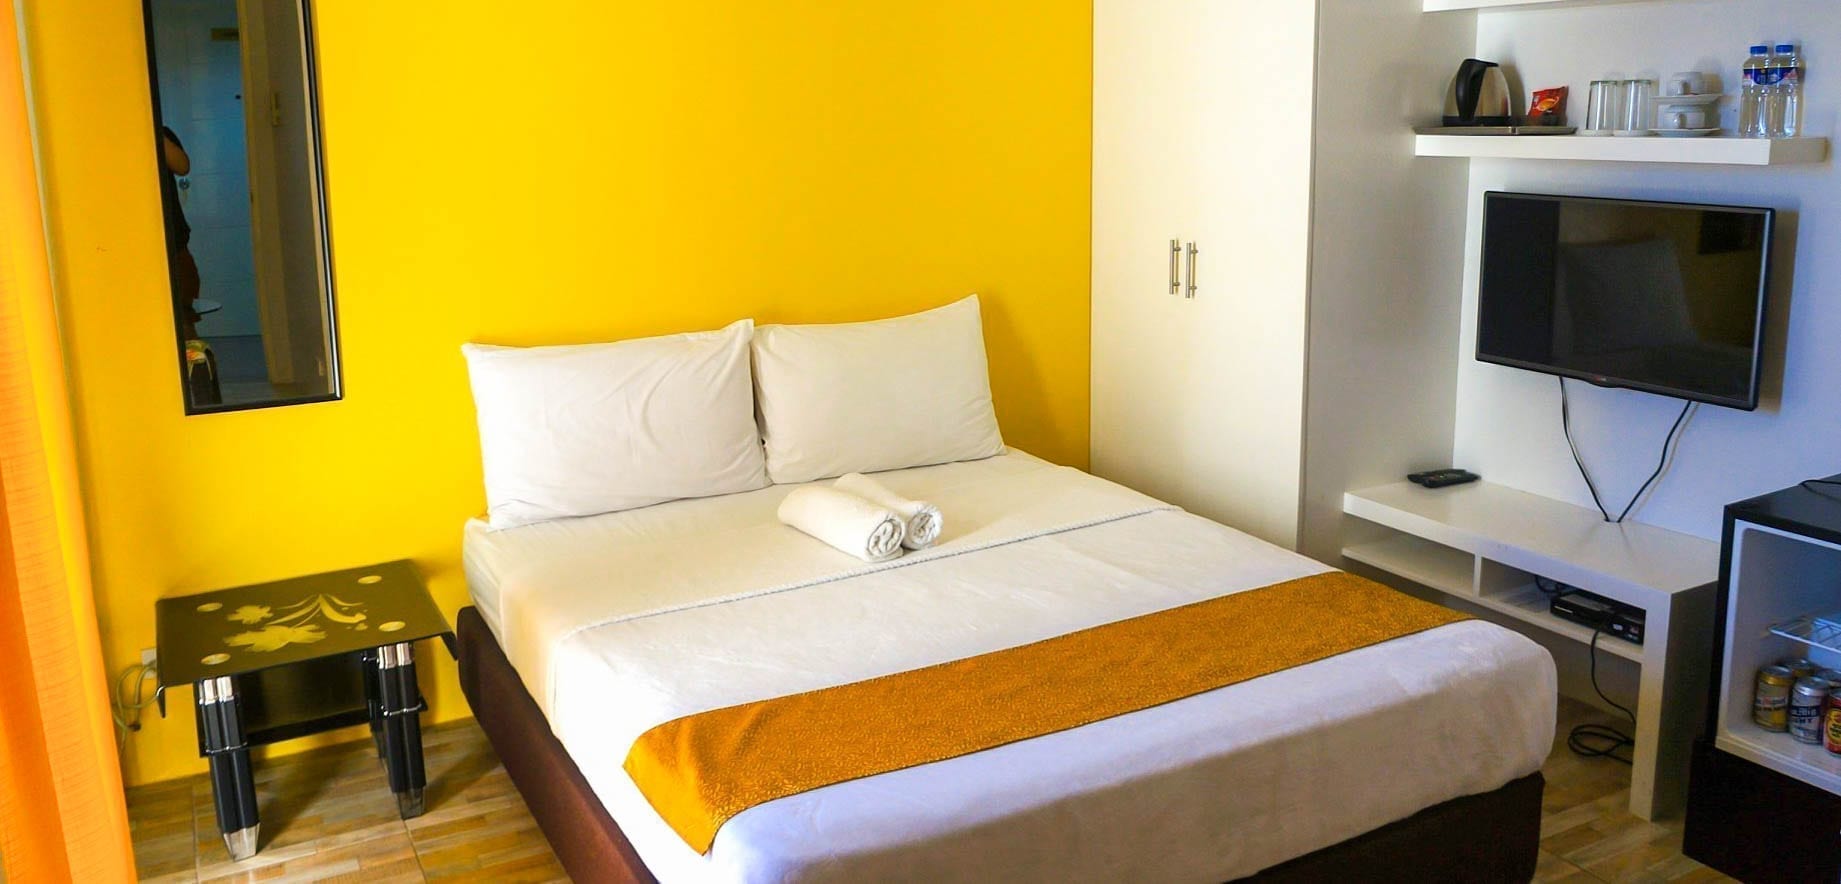 Buracai de Laiya Hotel and Resort rooms